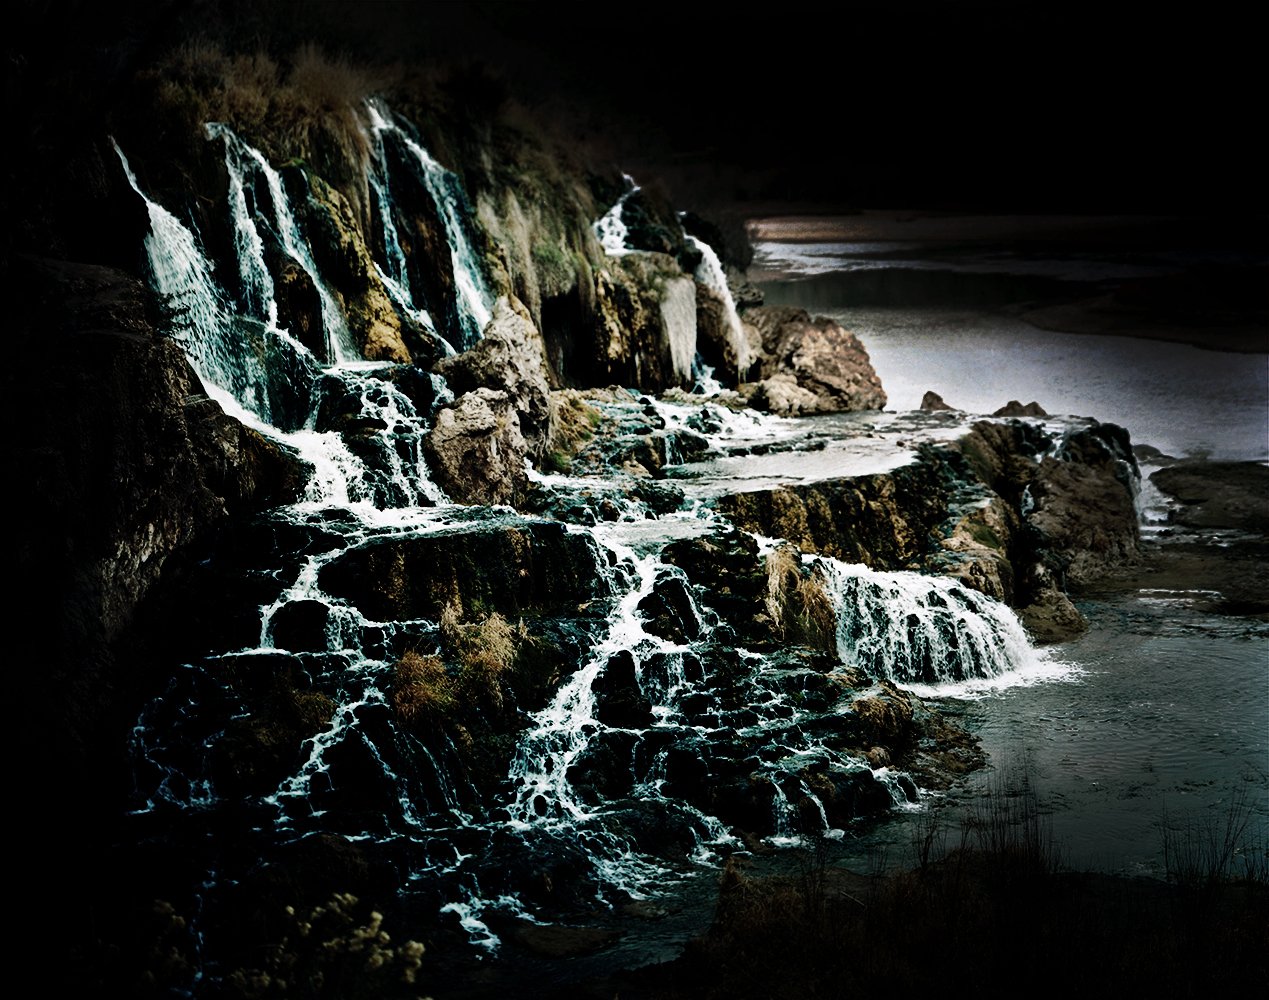  Waterfall, Snake River, Swan Valley, Idaho 2021 